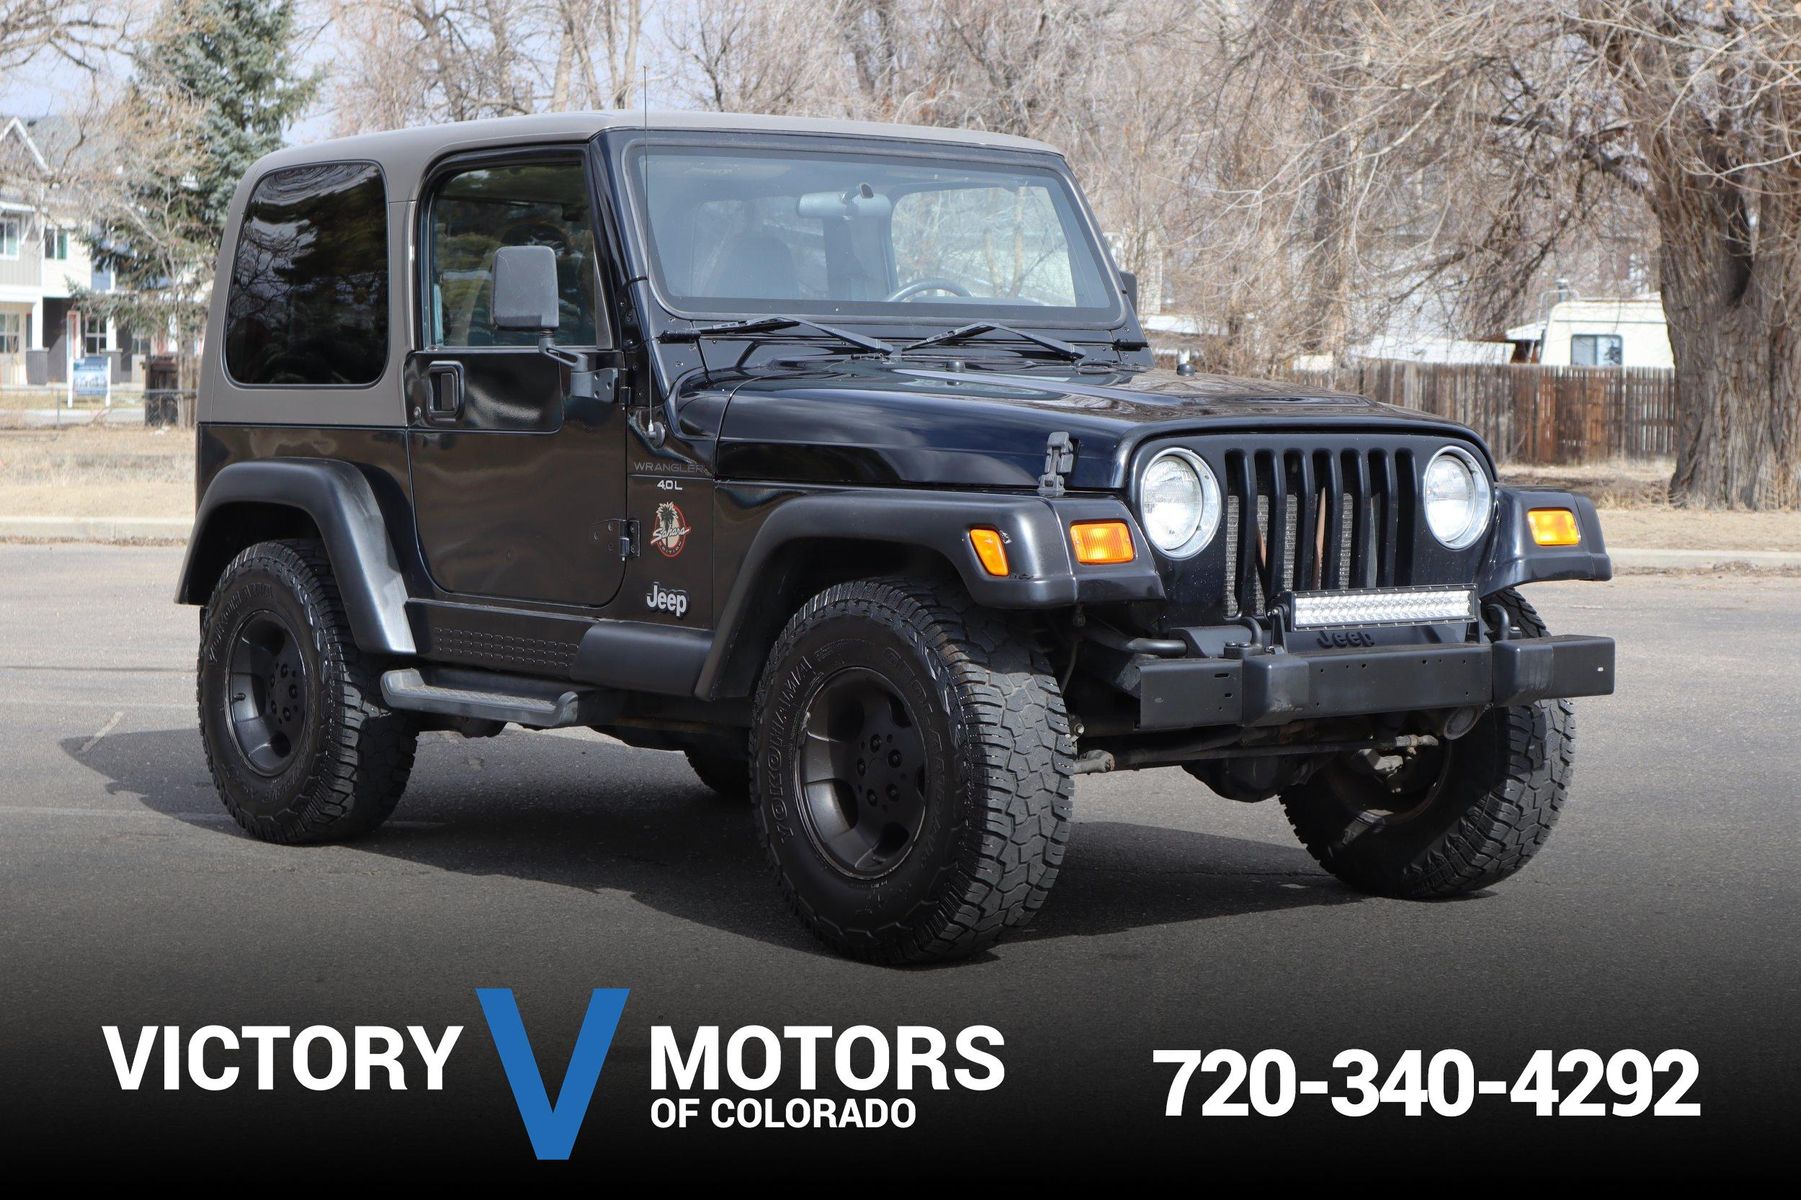 2001 Jeep Wrangler Sahara | Victory Motors of Colorado